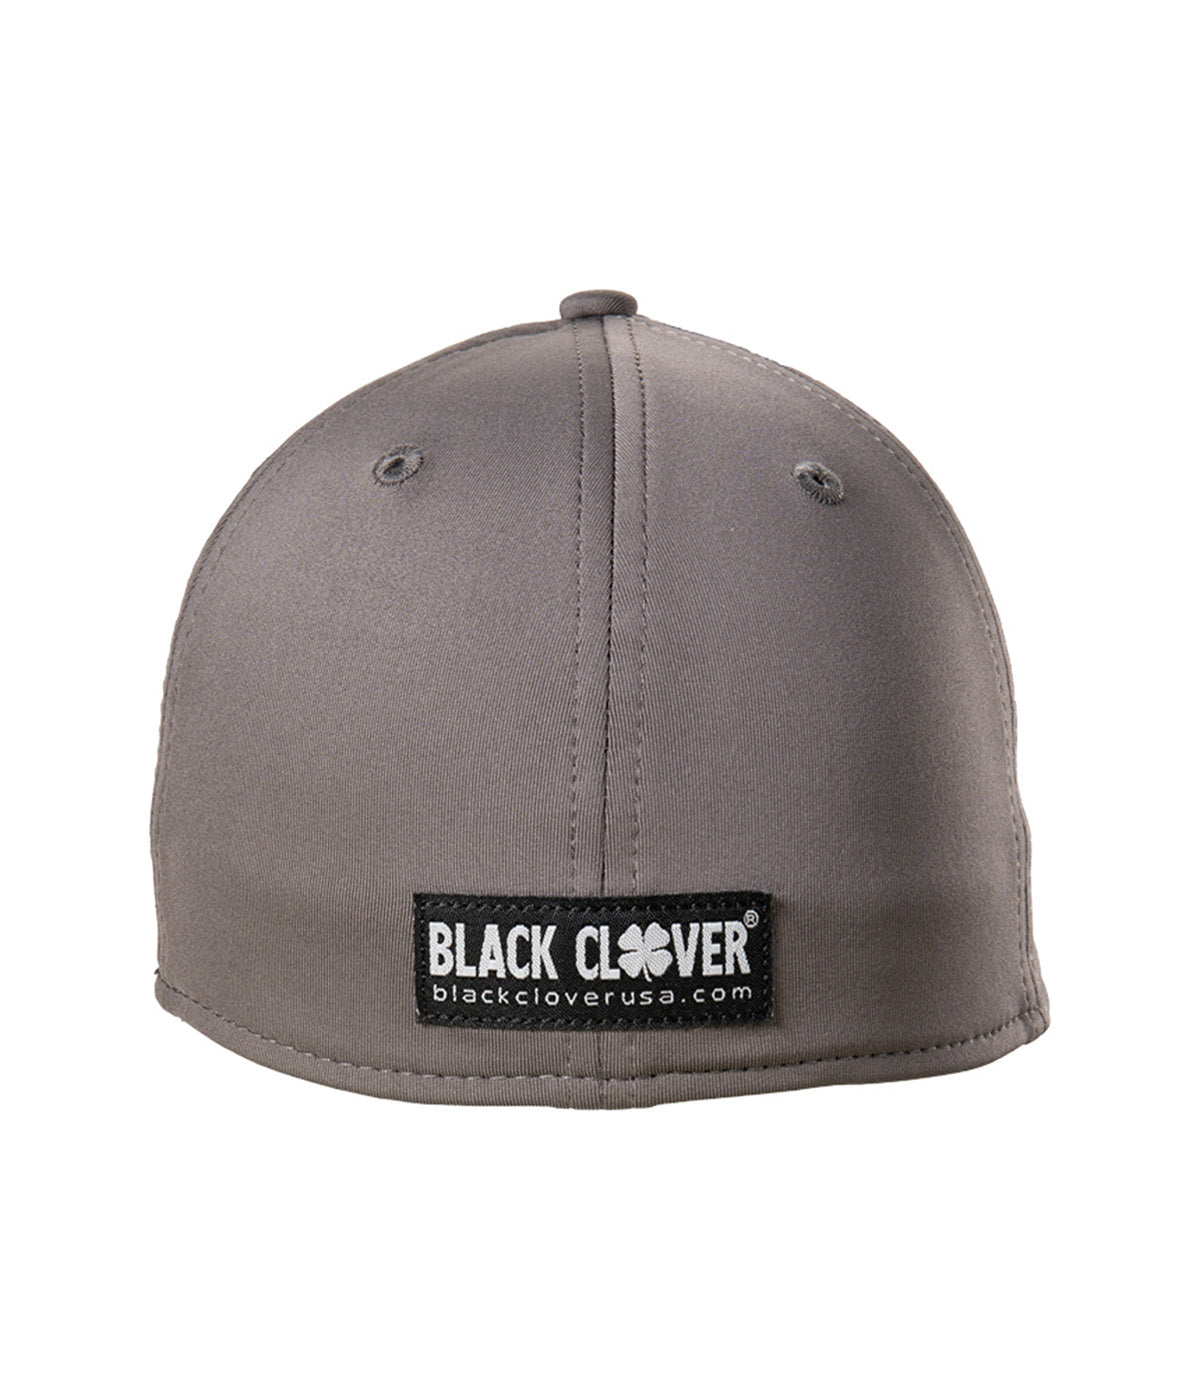 Grey / Black Clover White Trim